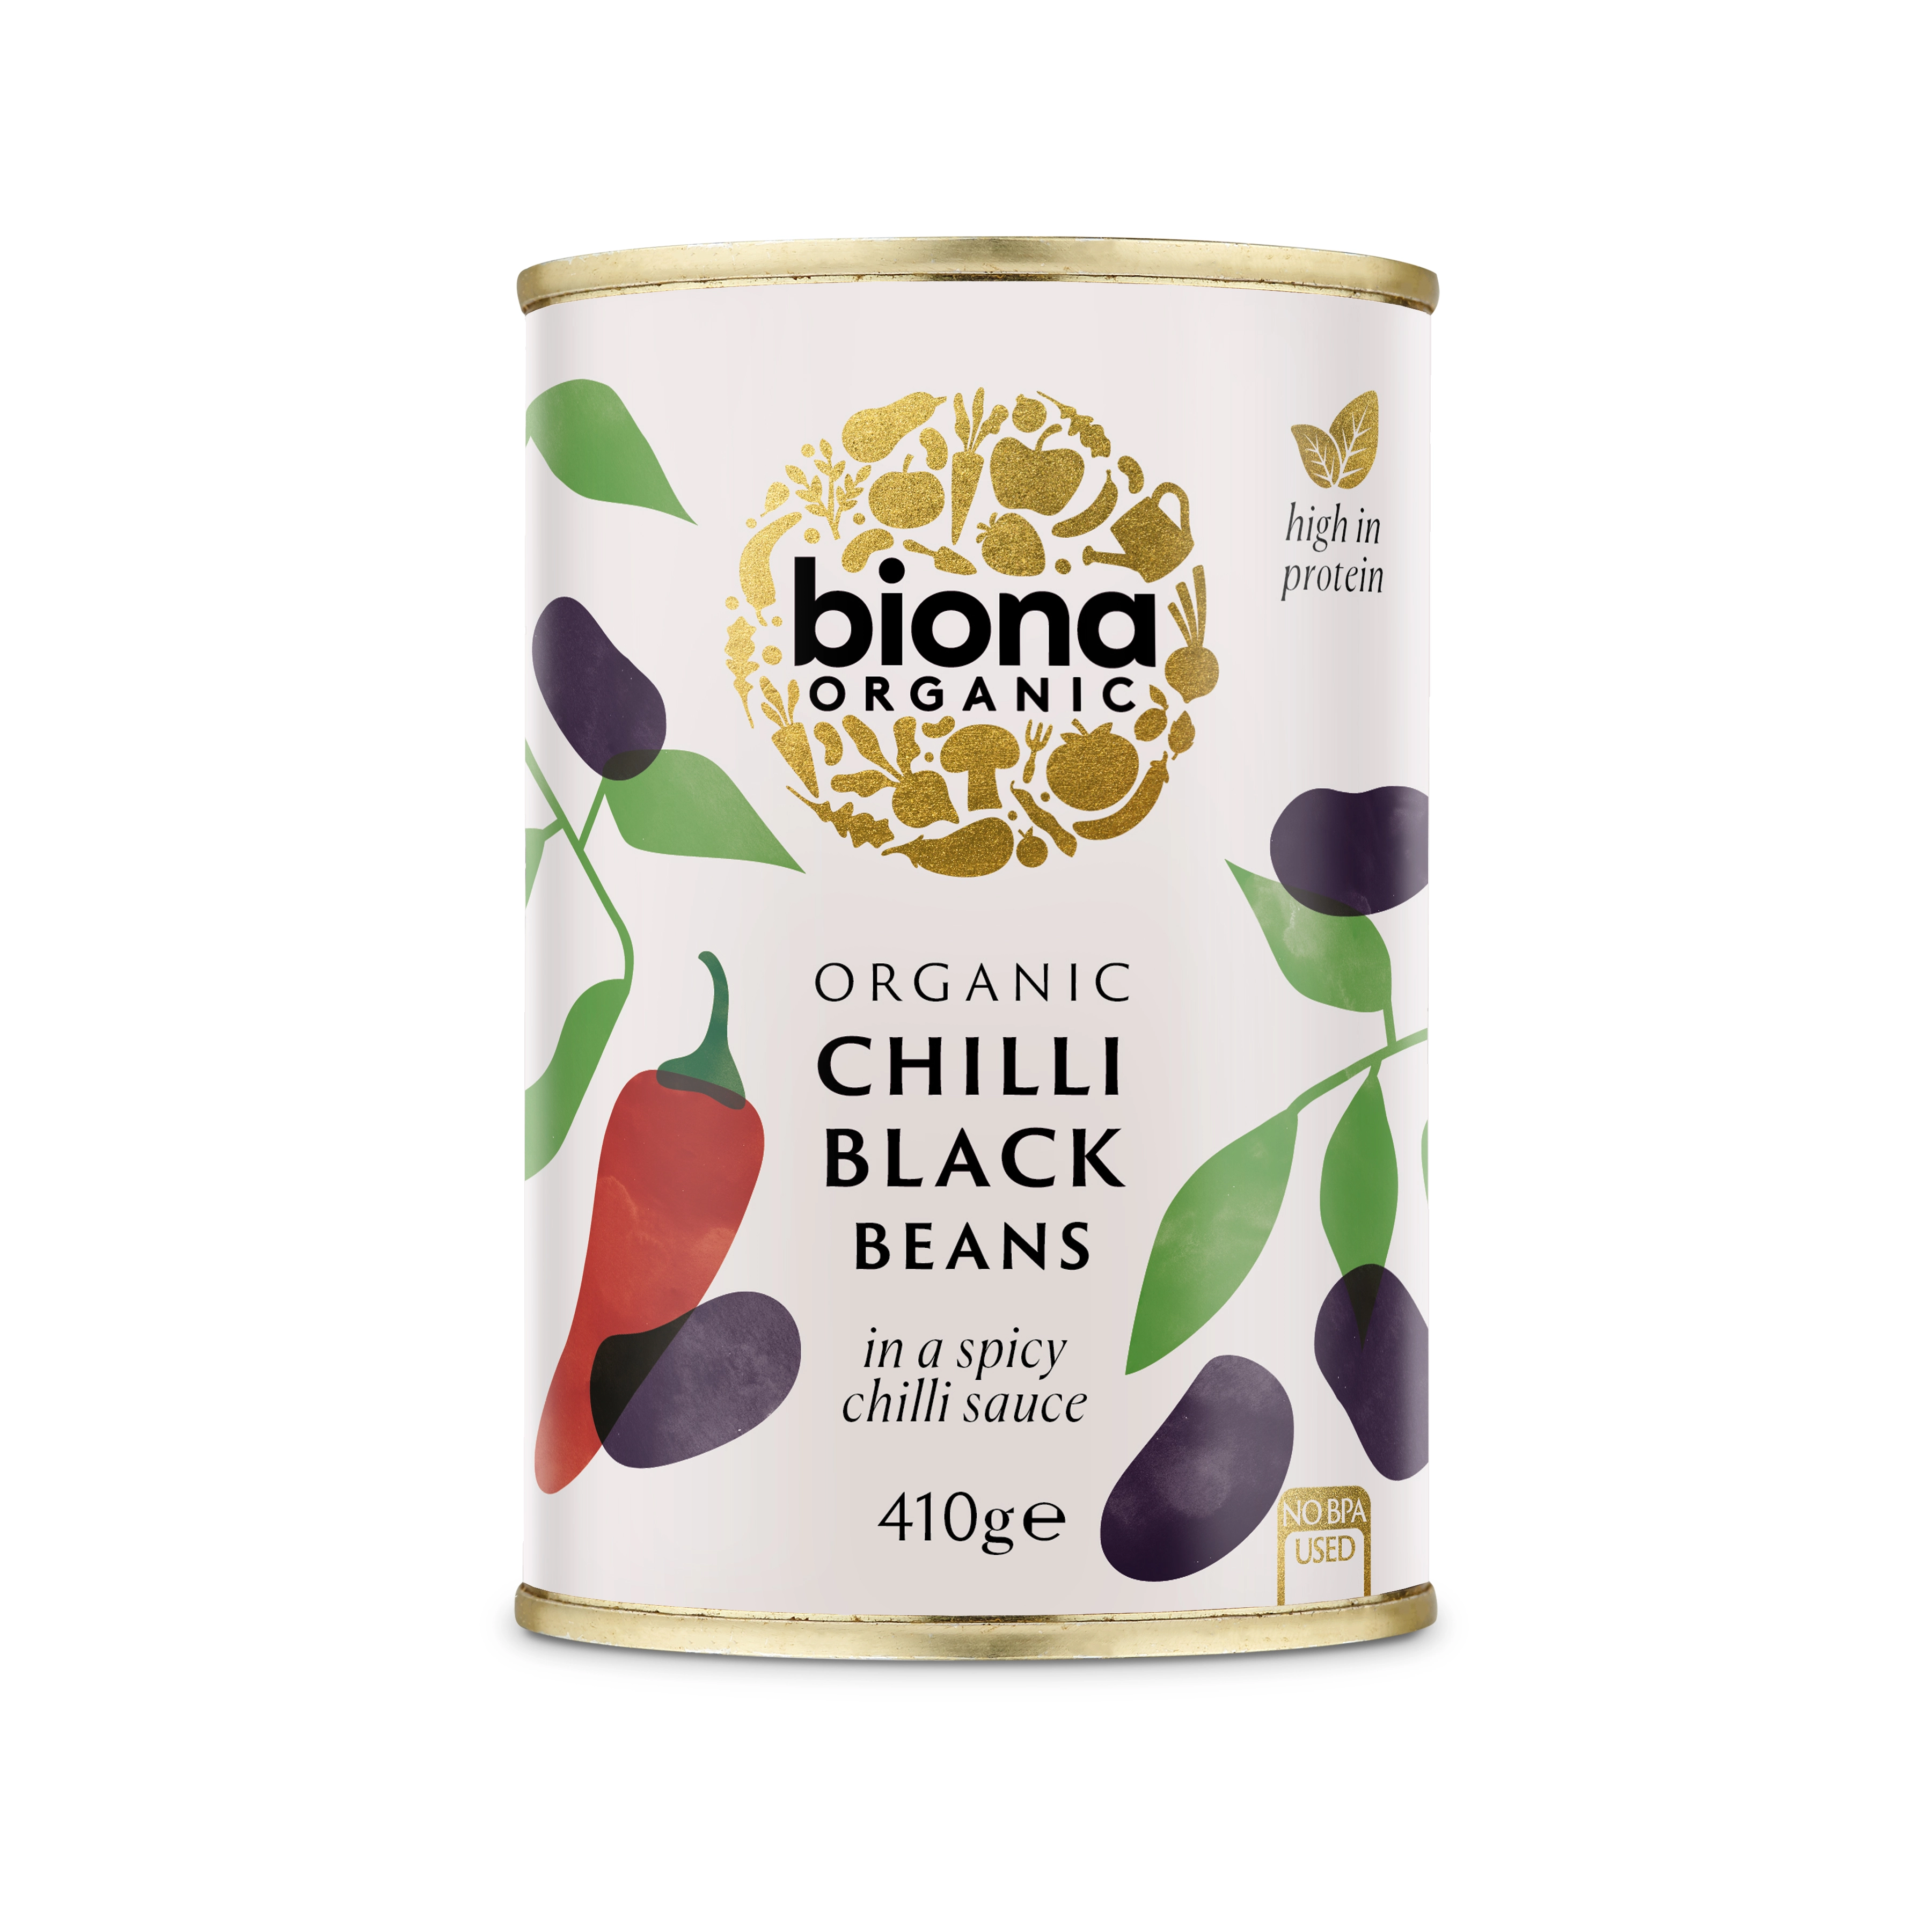 Biona Black Beans Chilli Organic 410g